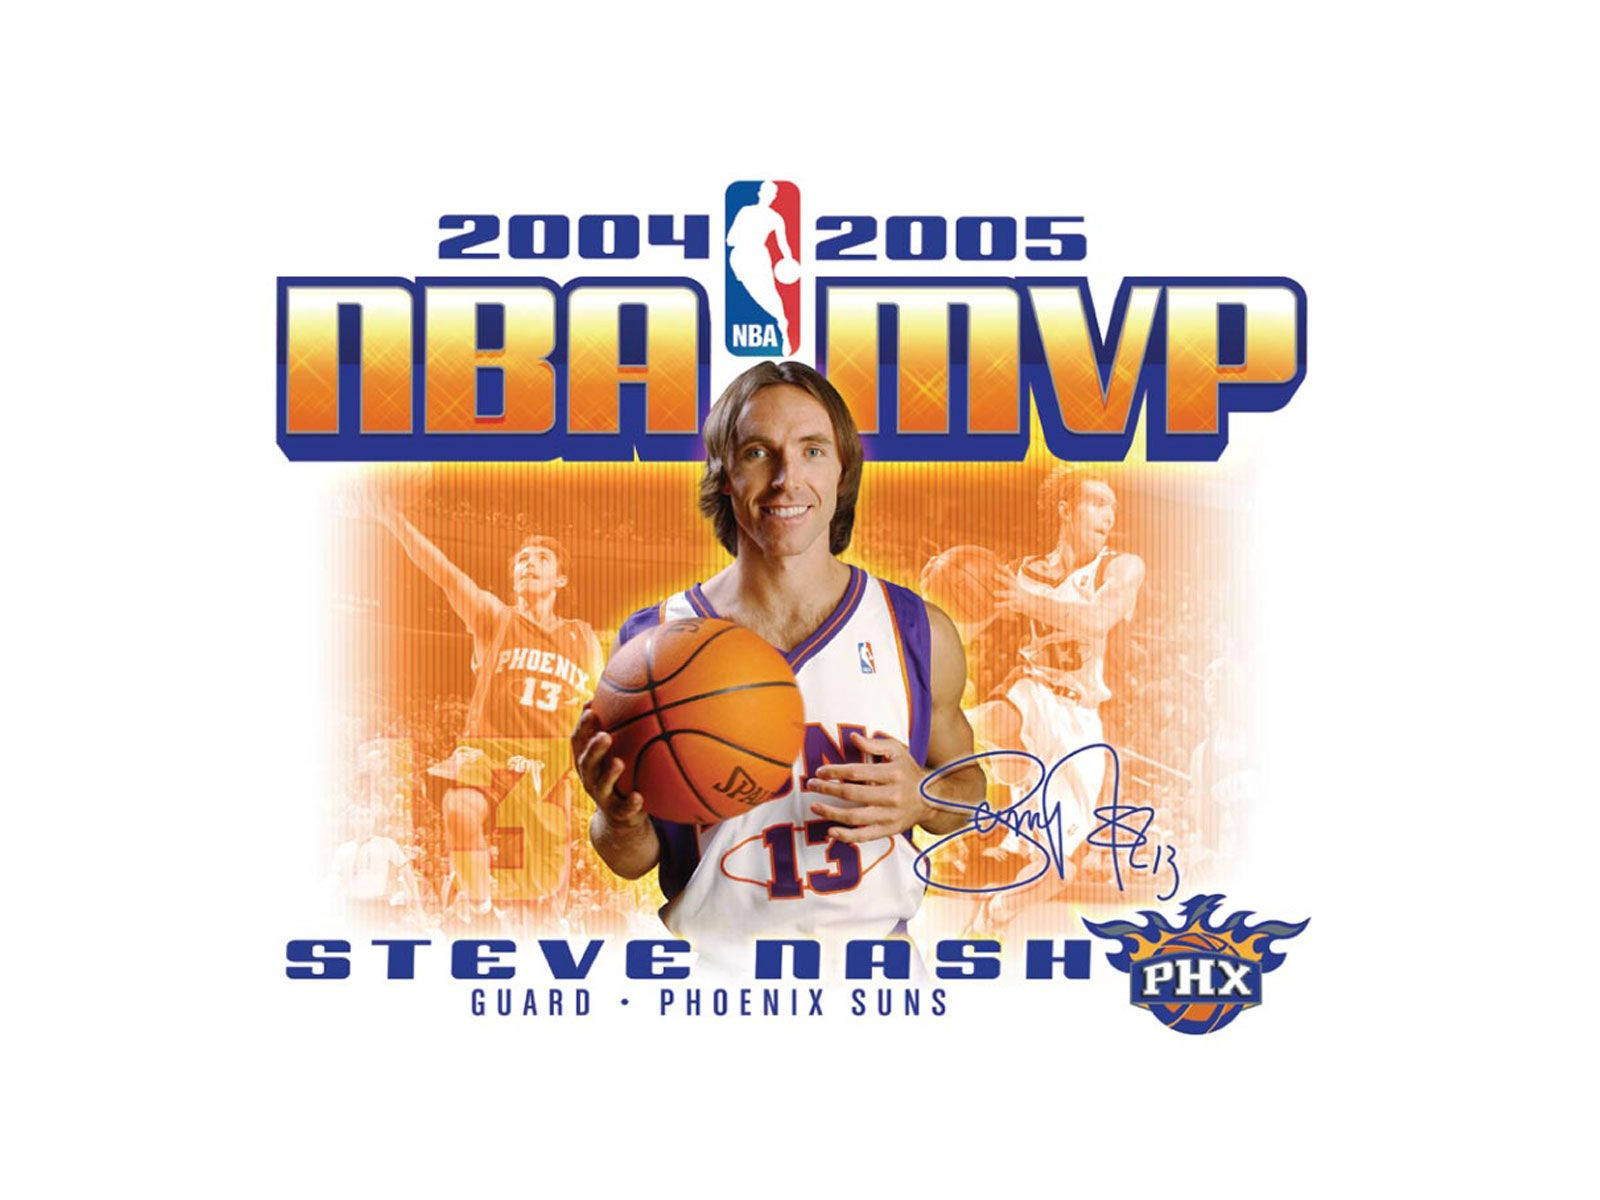 Steve Nash Nba 2004 2005 Mvp Background